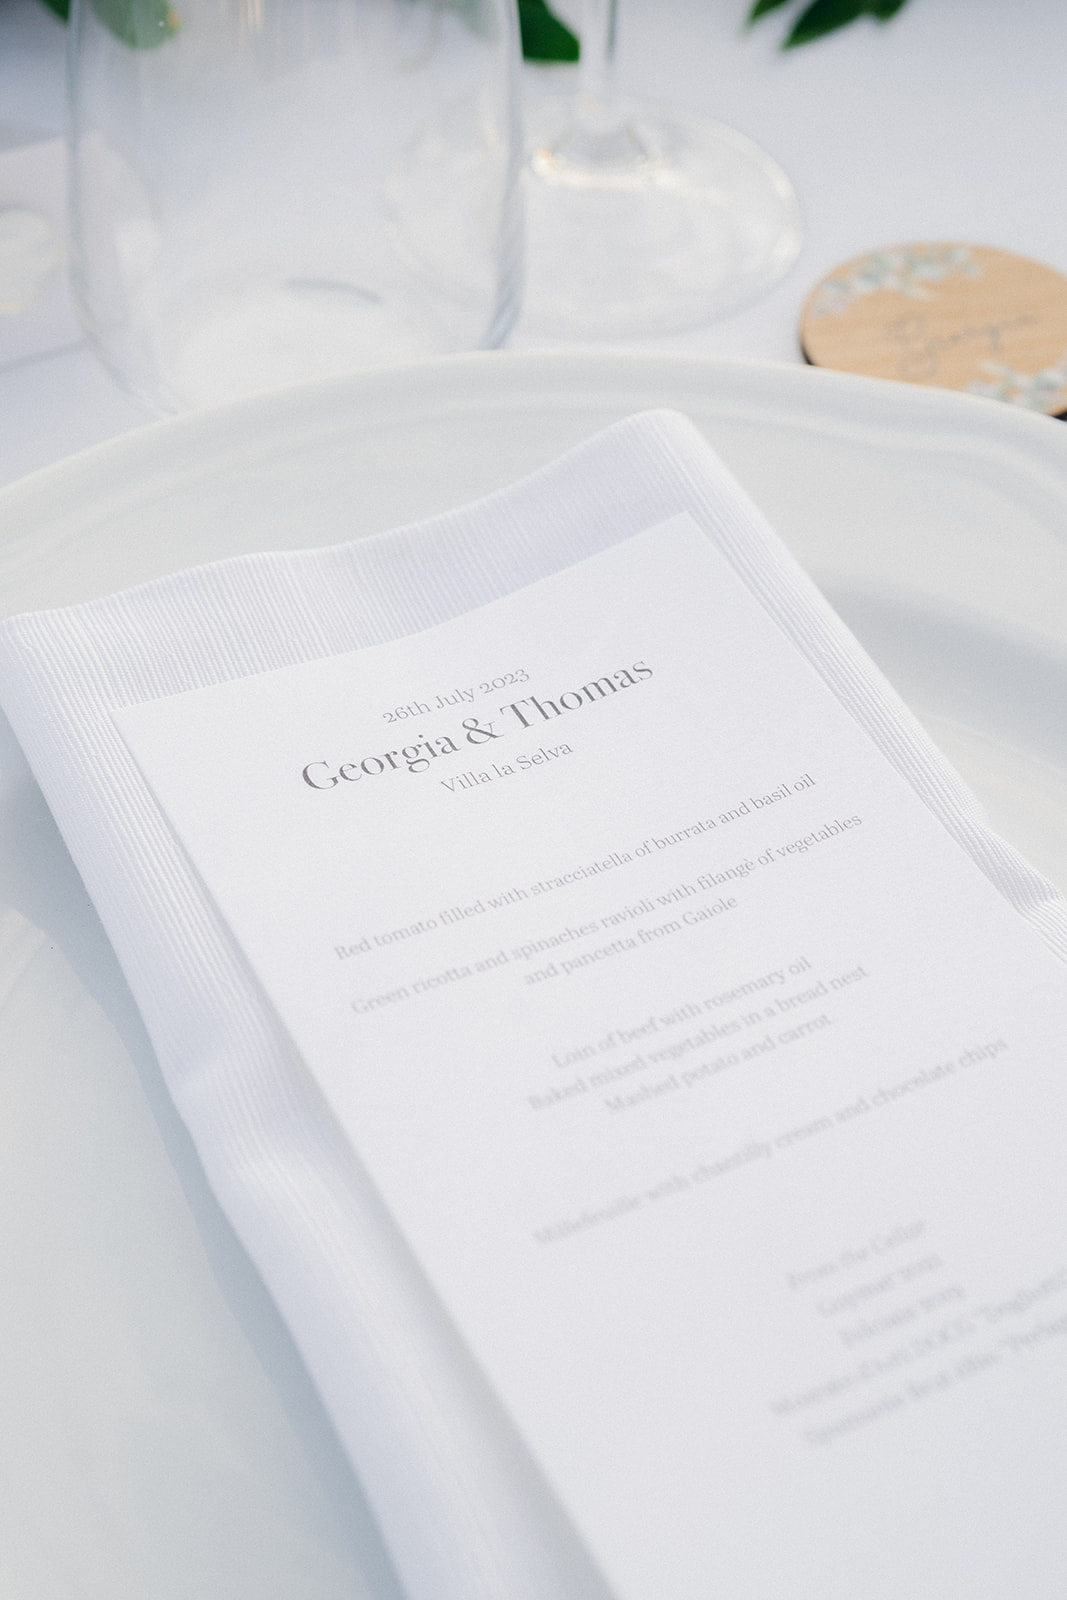 The menu for Georgia and Tom's wedding dinner at Villa La Selva